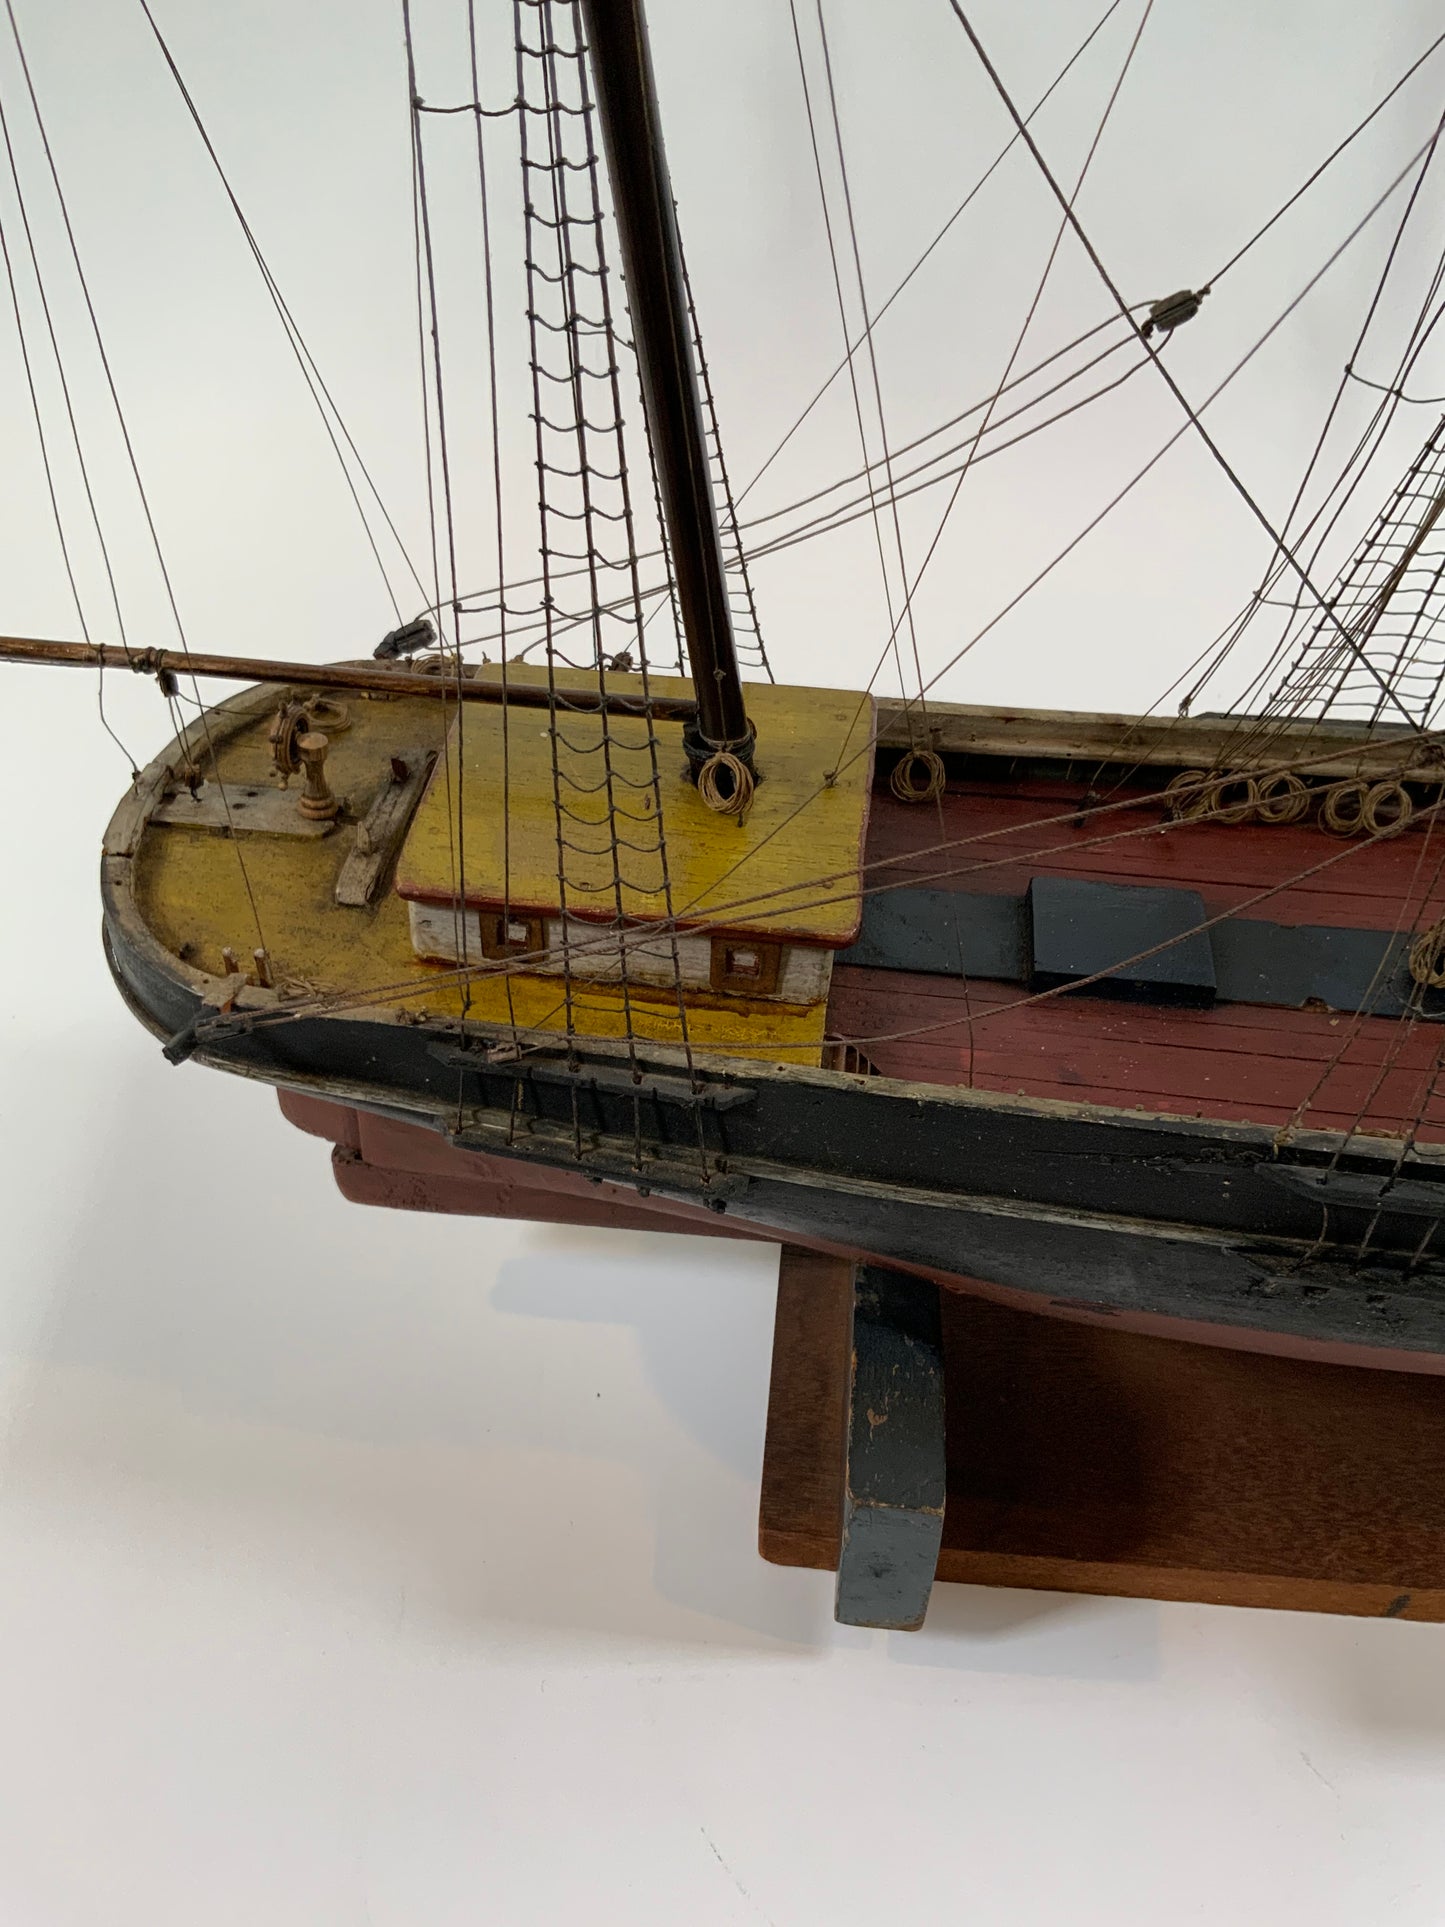 Antique Ship Model of an American Bark - Lannan Gallery